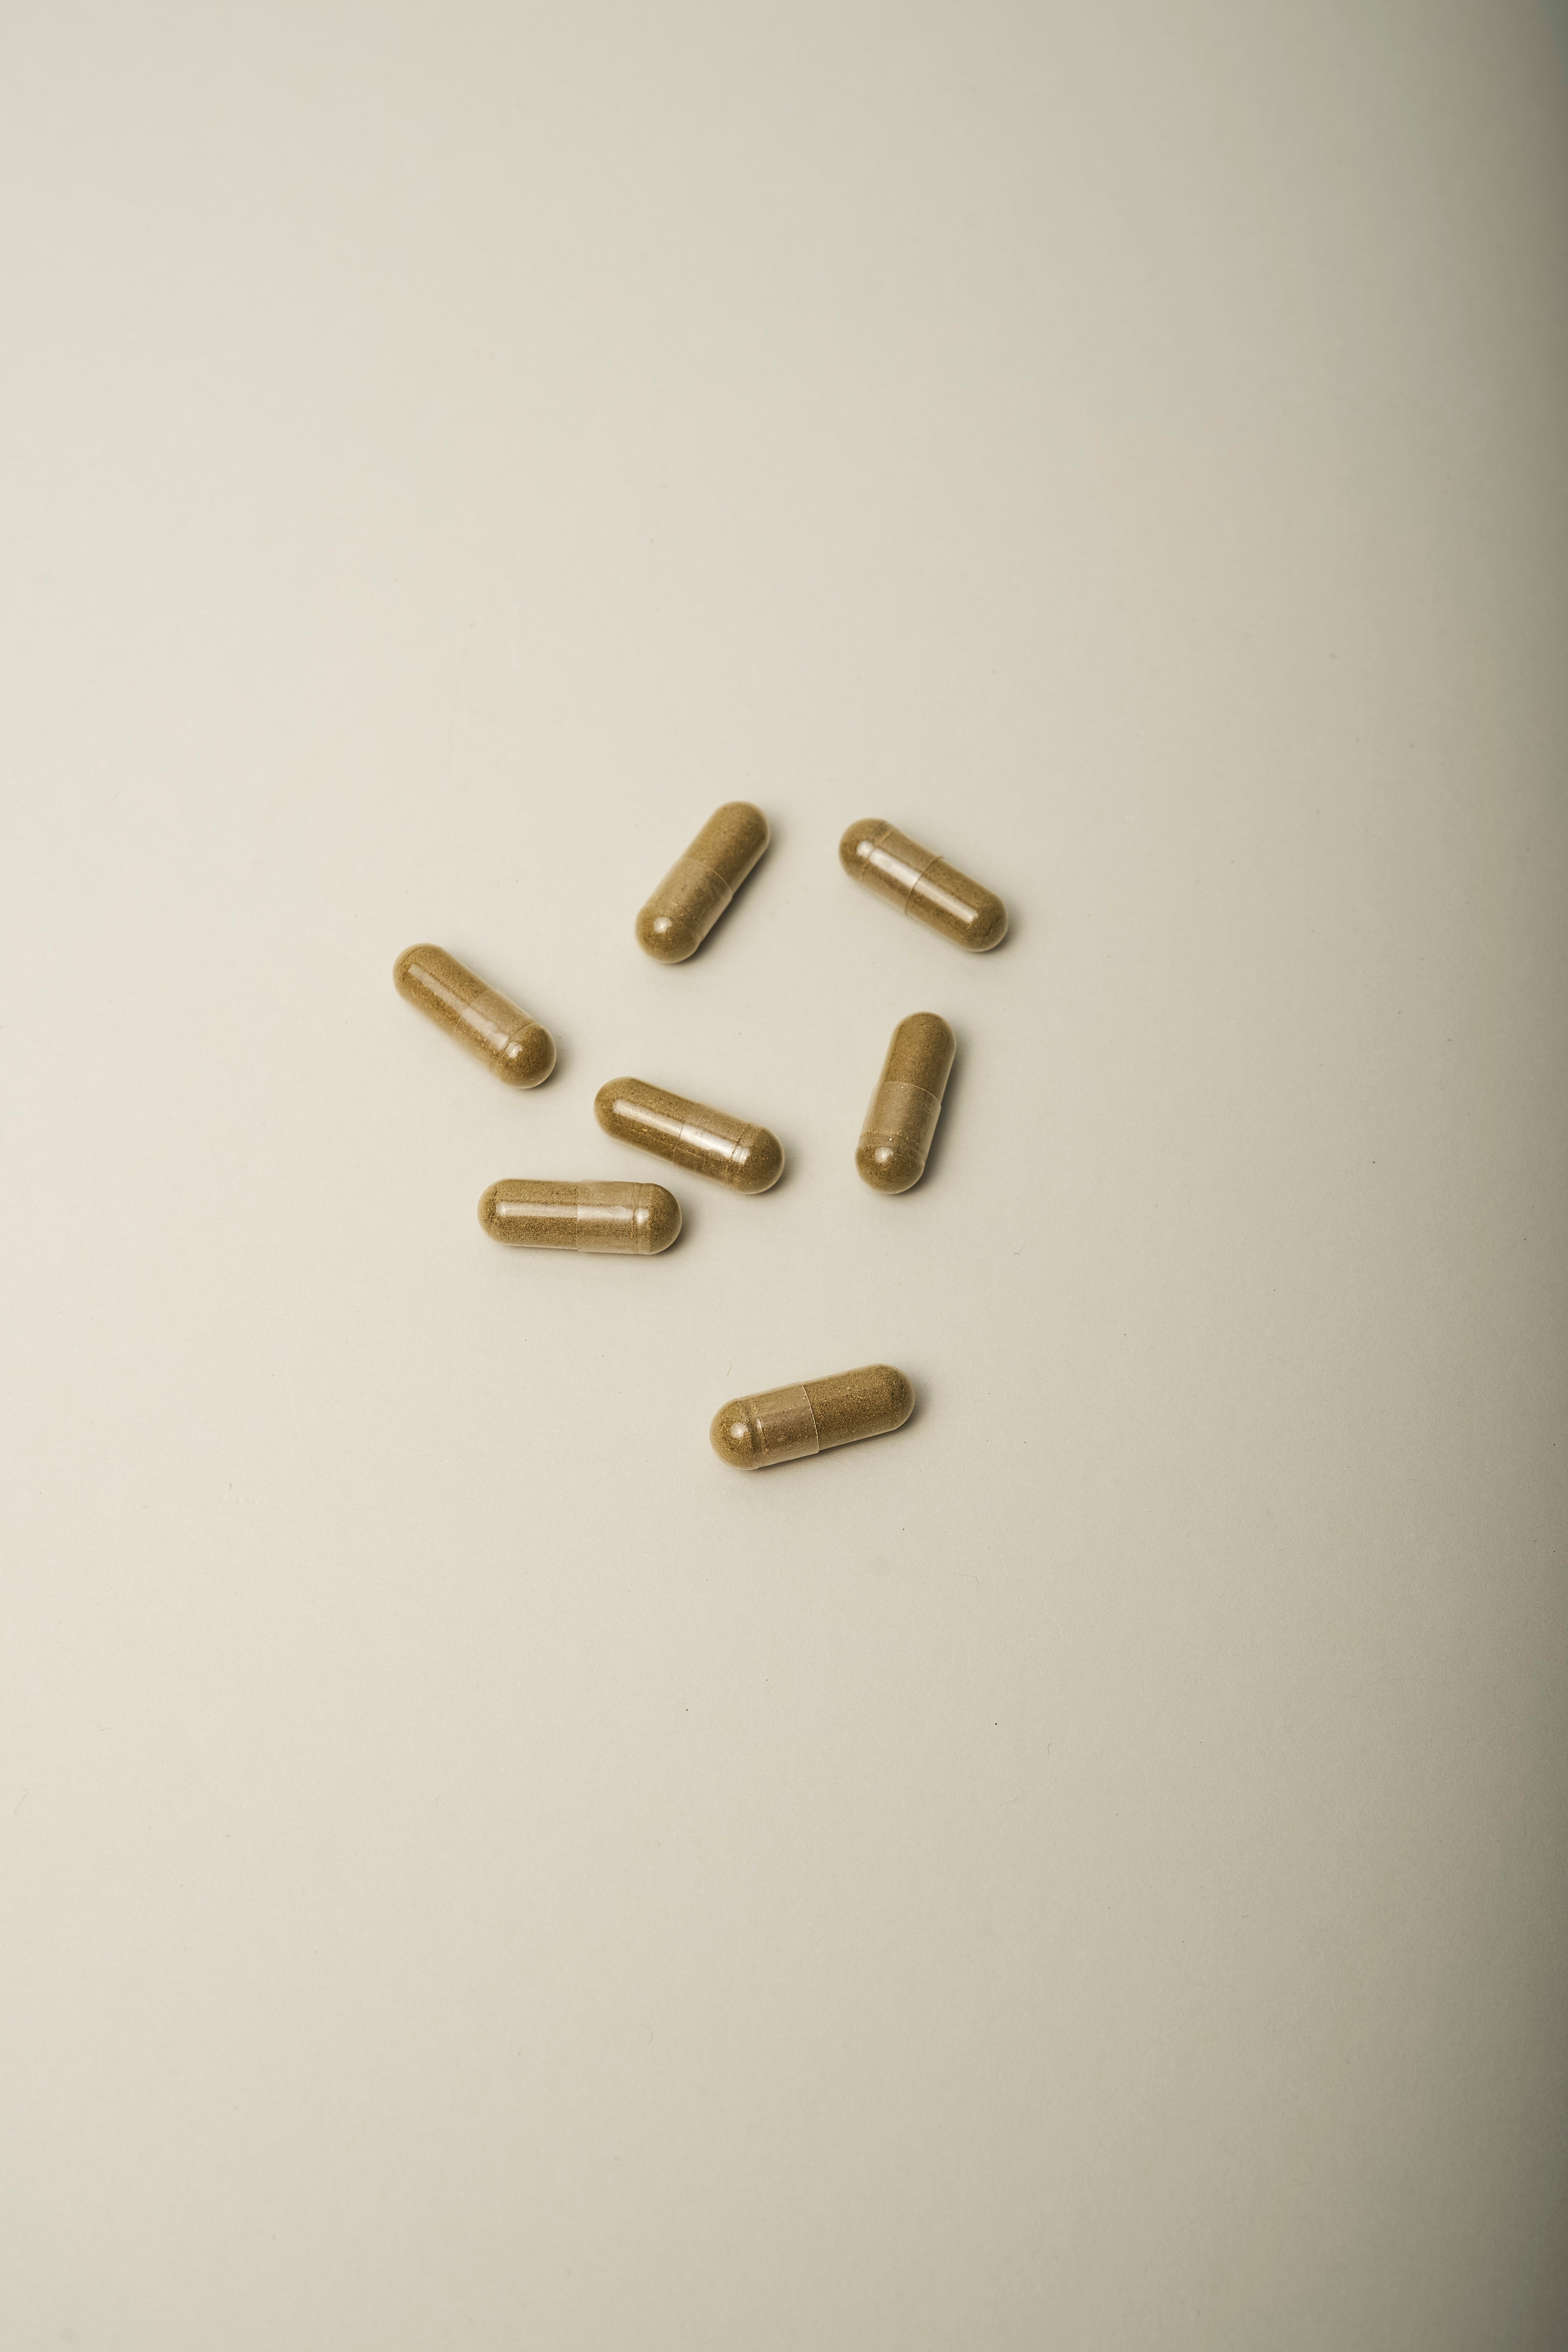 Iron and Vitamin C capsules - 60 capsules in 2 month suppy